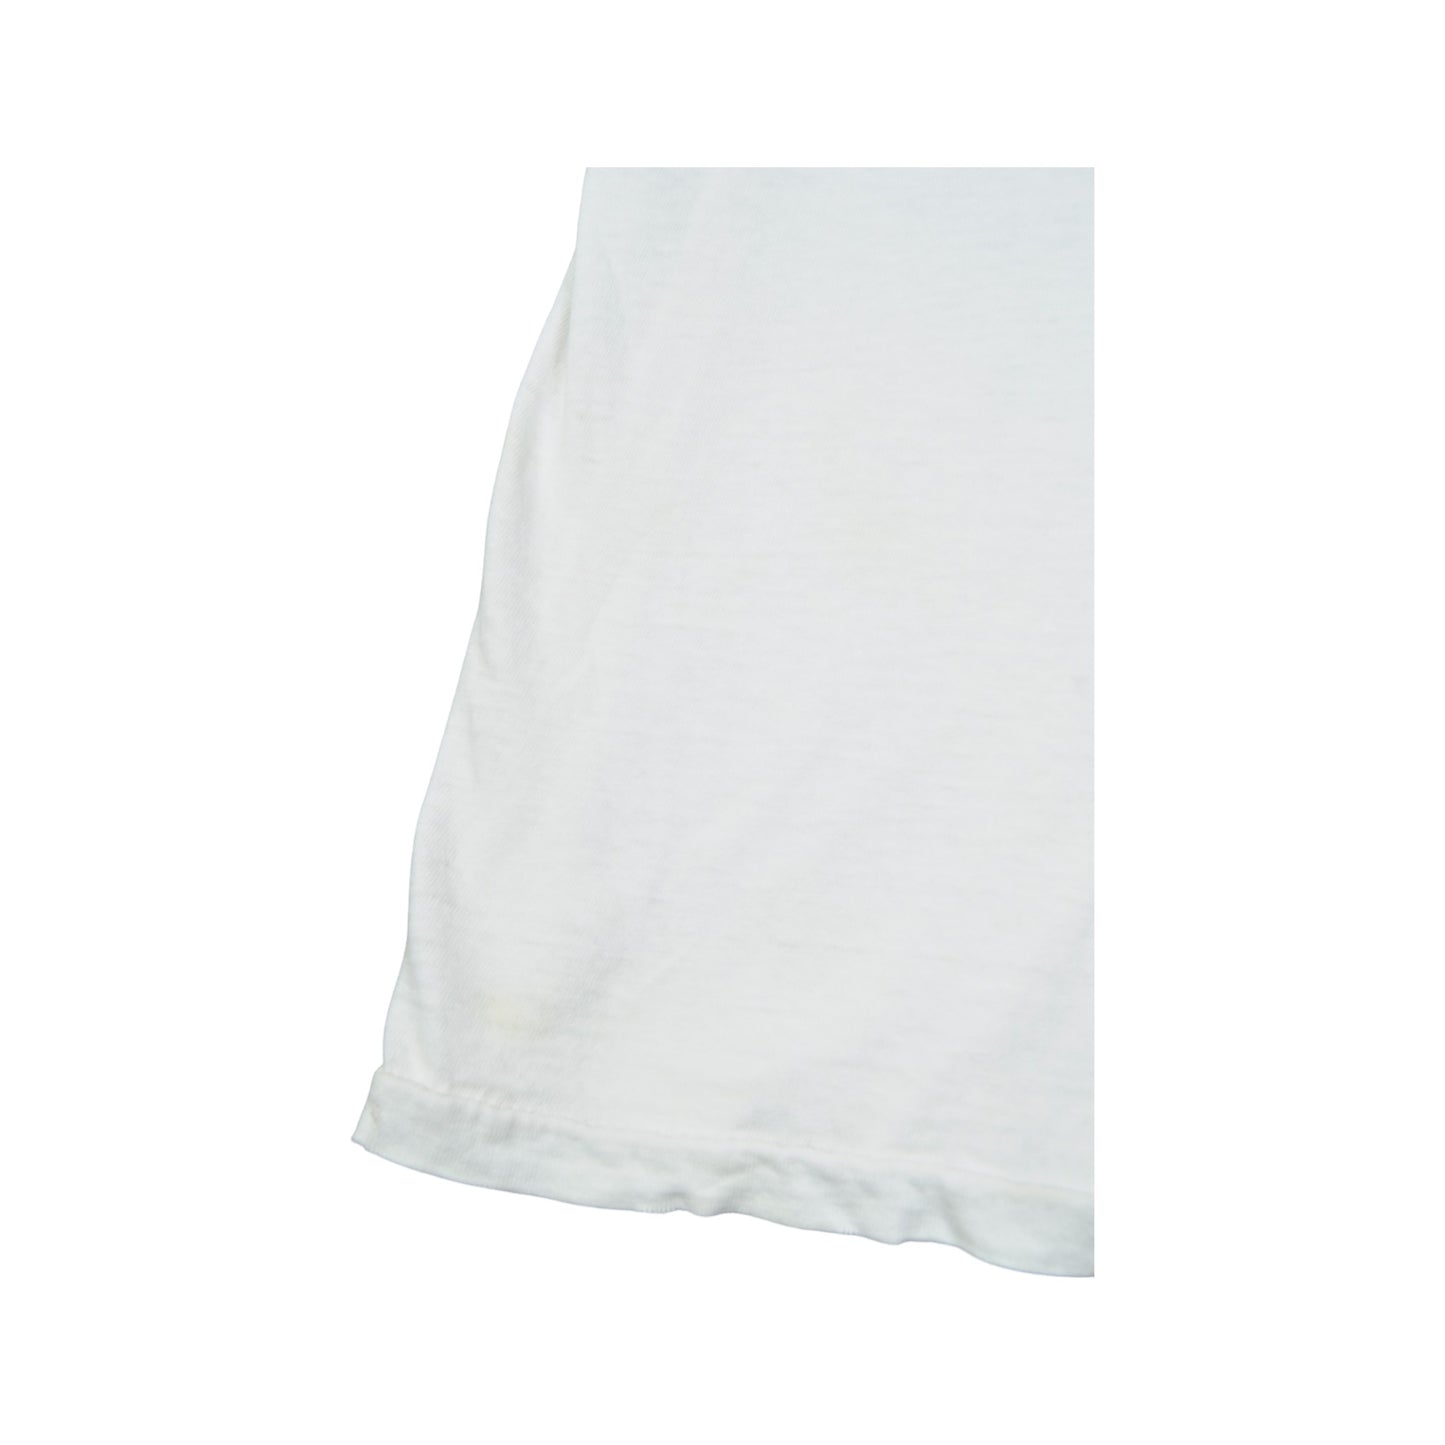 Vintage Fire Island 1987 Single Stitch T-Shirt White Medium